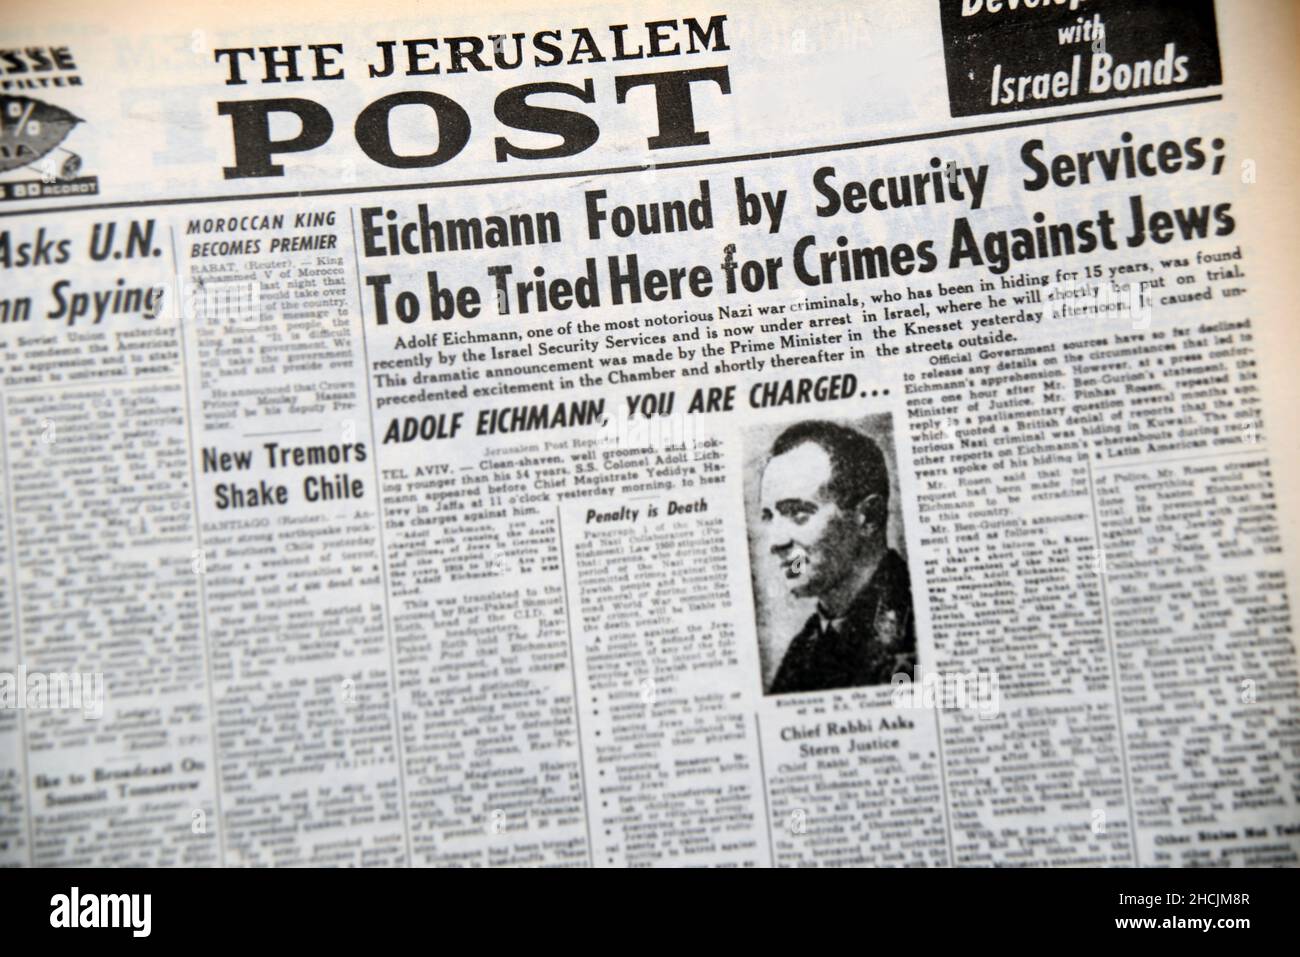 Headline from Israeli newspaper featuring an historical event - Adolf Eichmann captured, 1961 Stock Photo